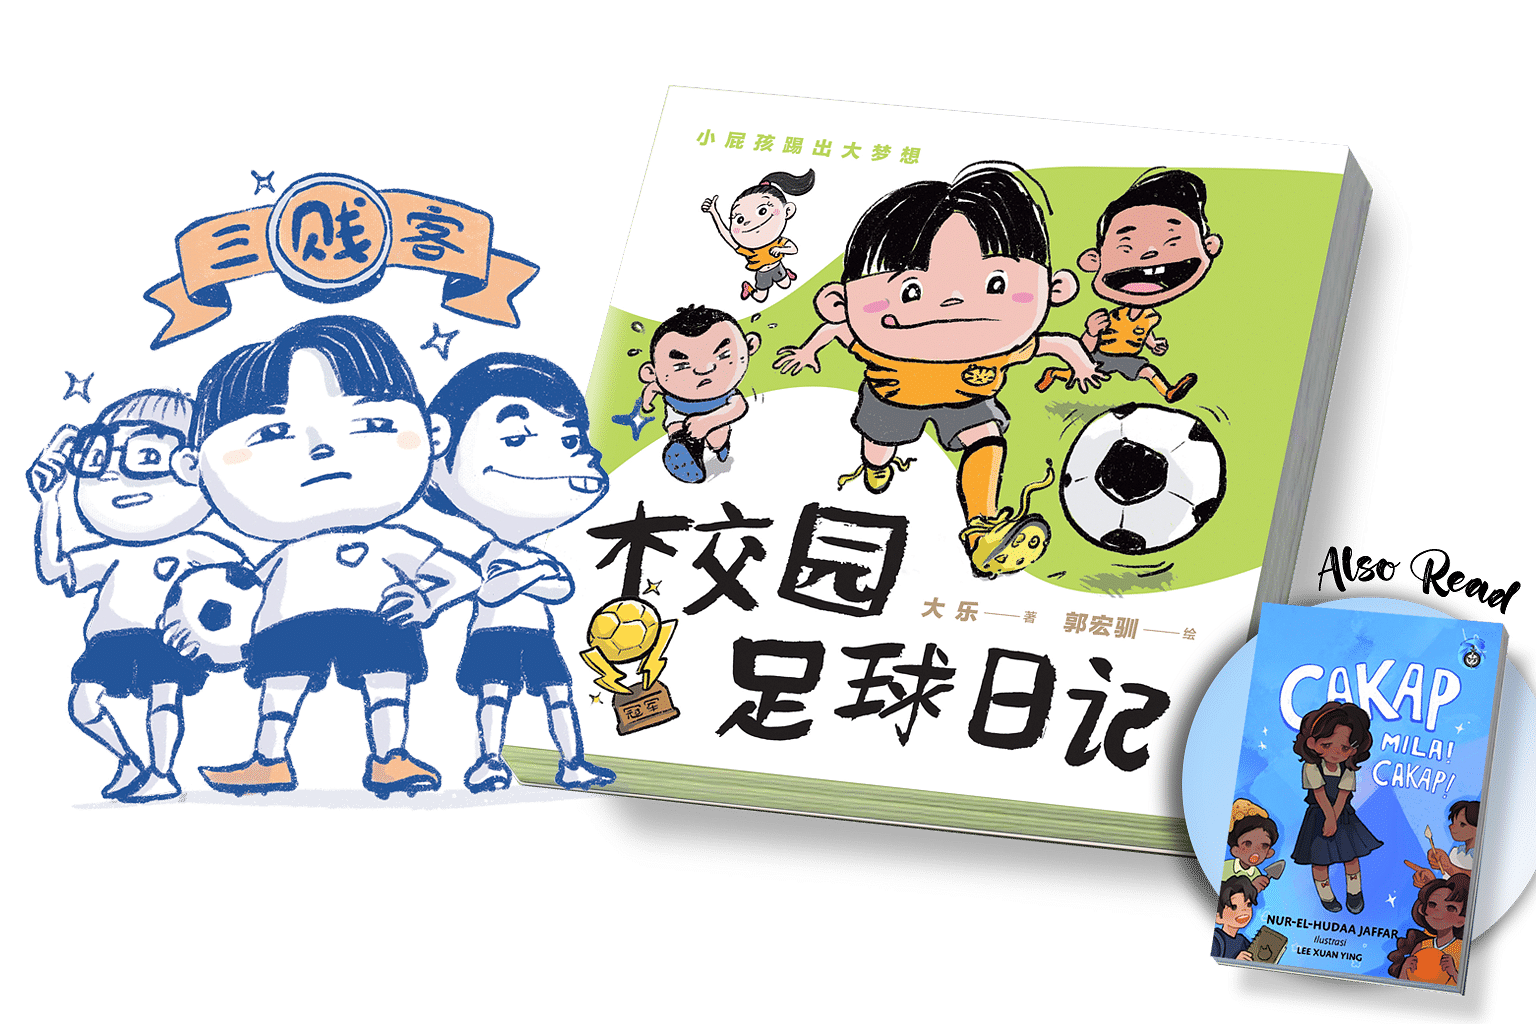 children's story books, football diary in chinese and cakap mila cakap in malay